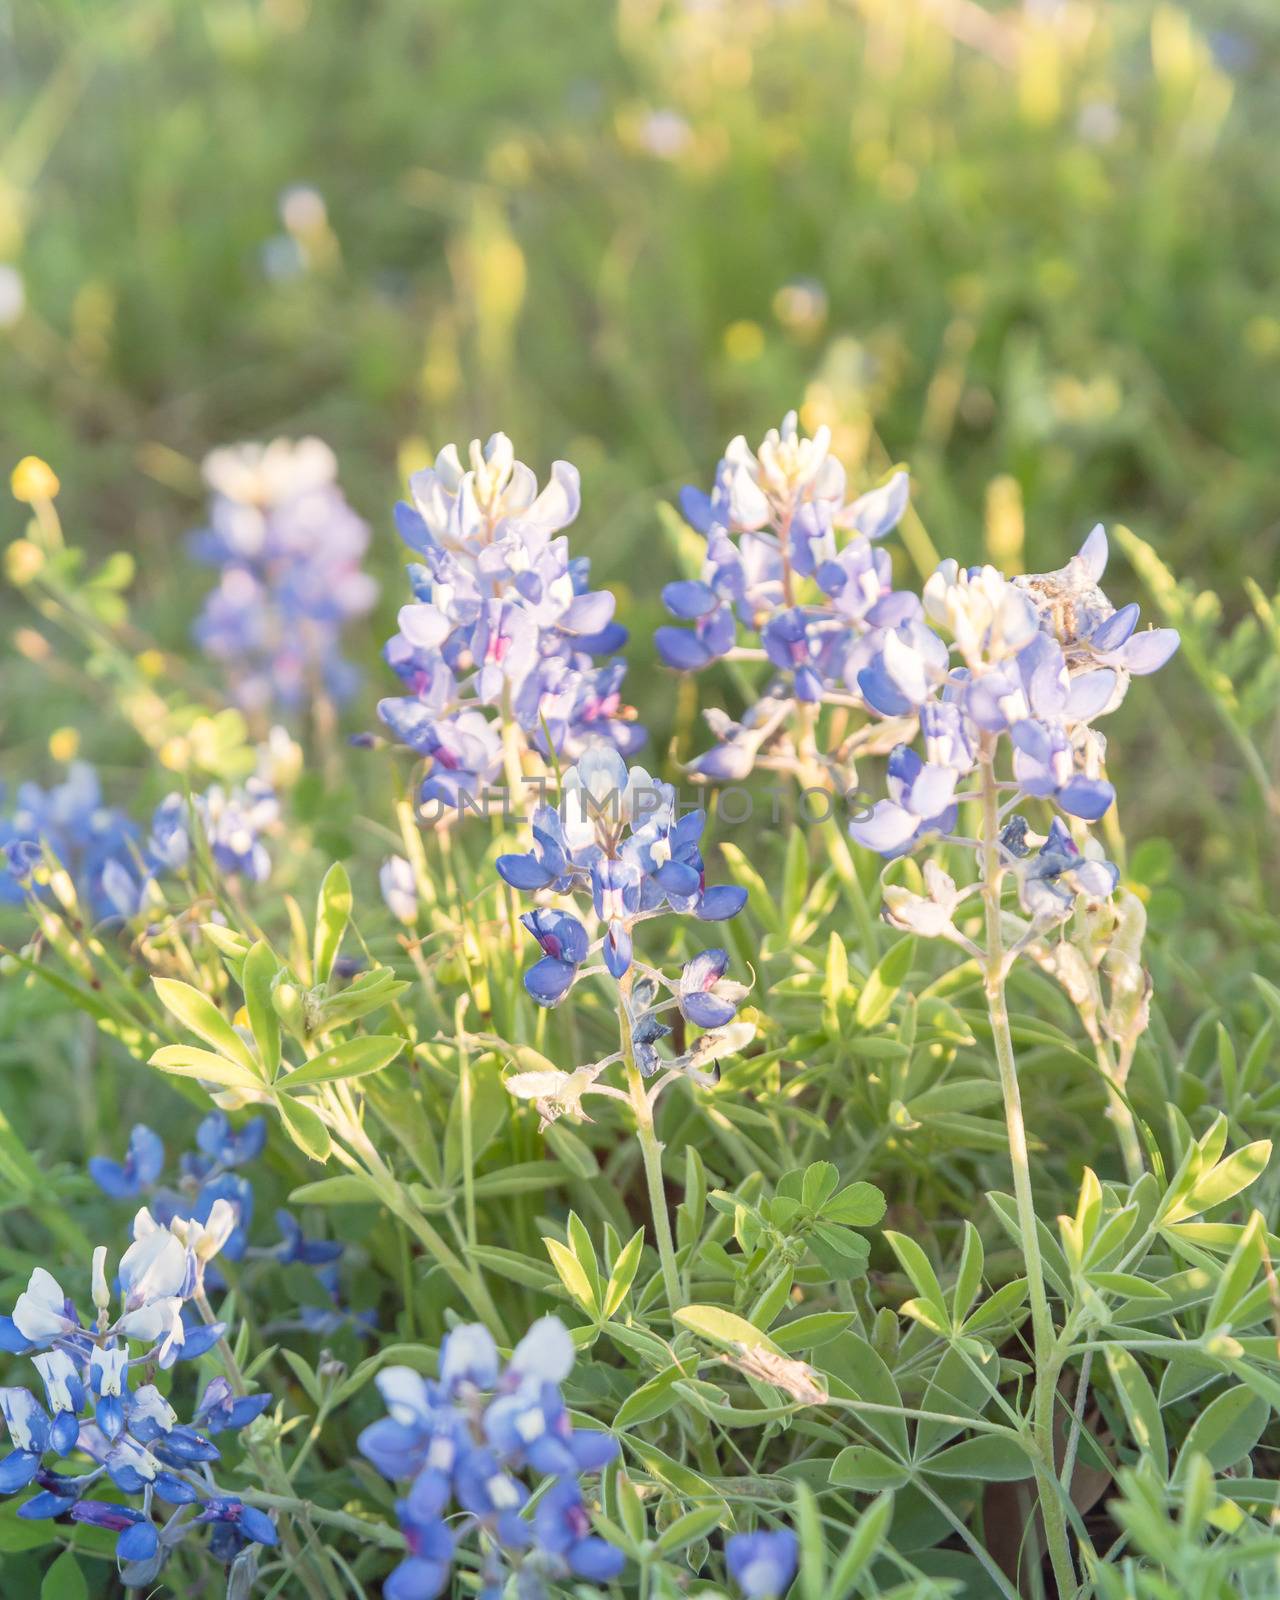 Blossom Bluebonnet wildflower at sunset in springtime near Dallas by trongnguyen